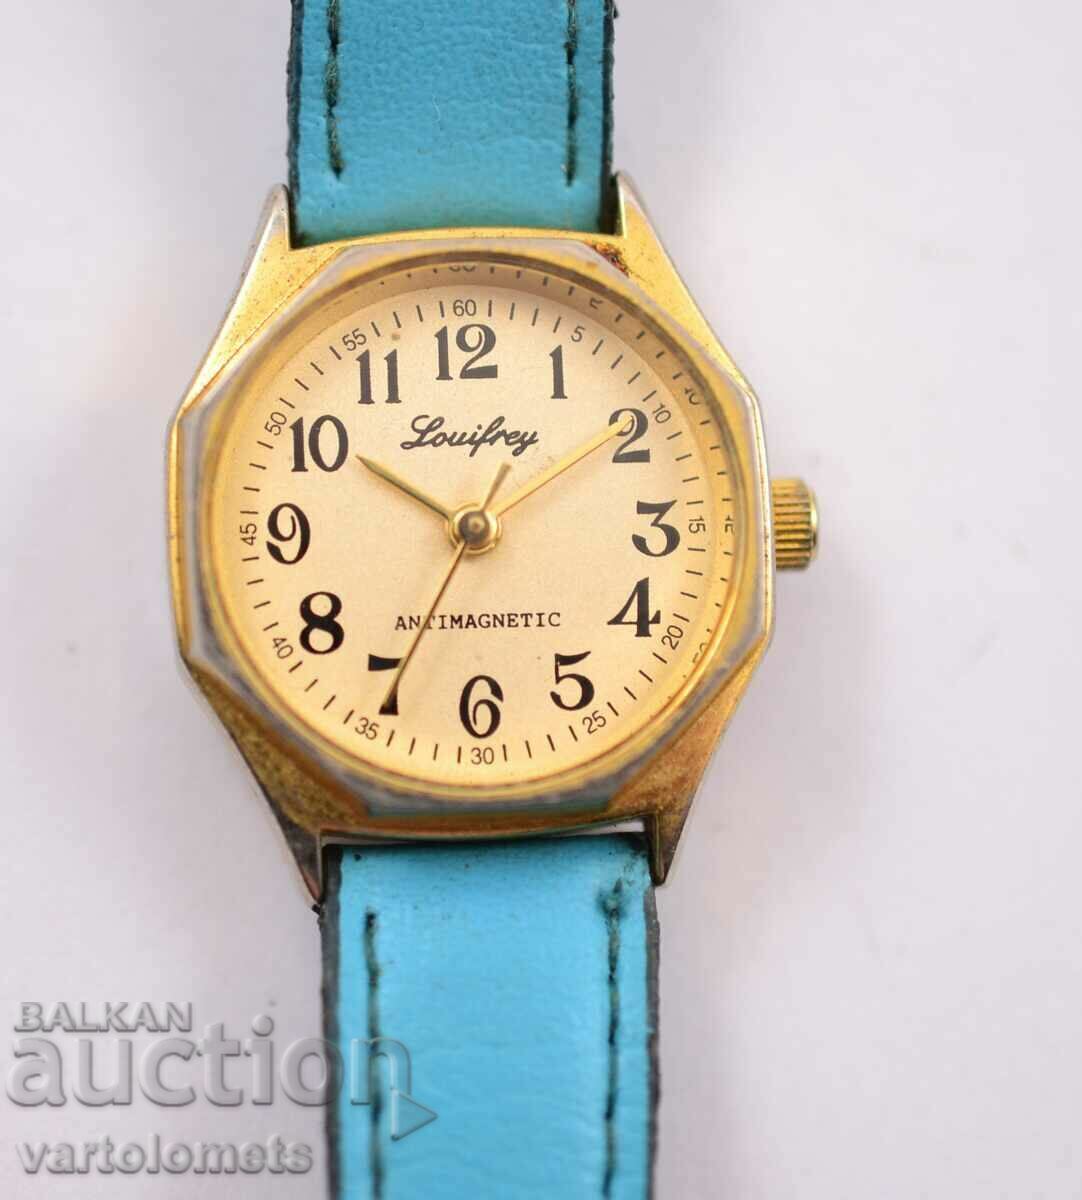 Women's Louisfrey Gold Plated Watch - Working